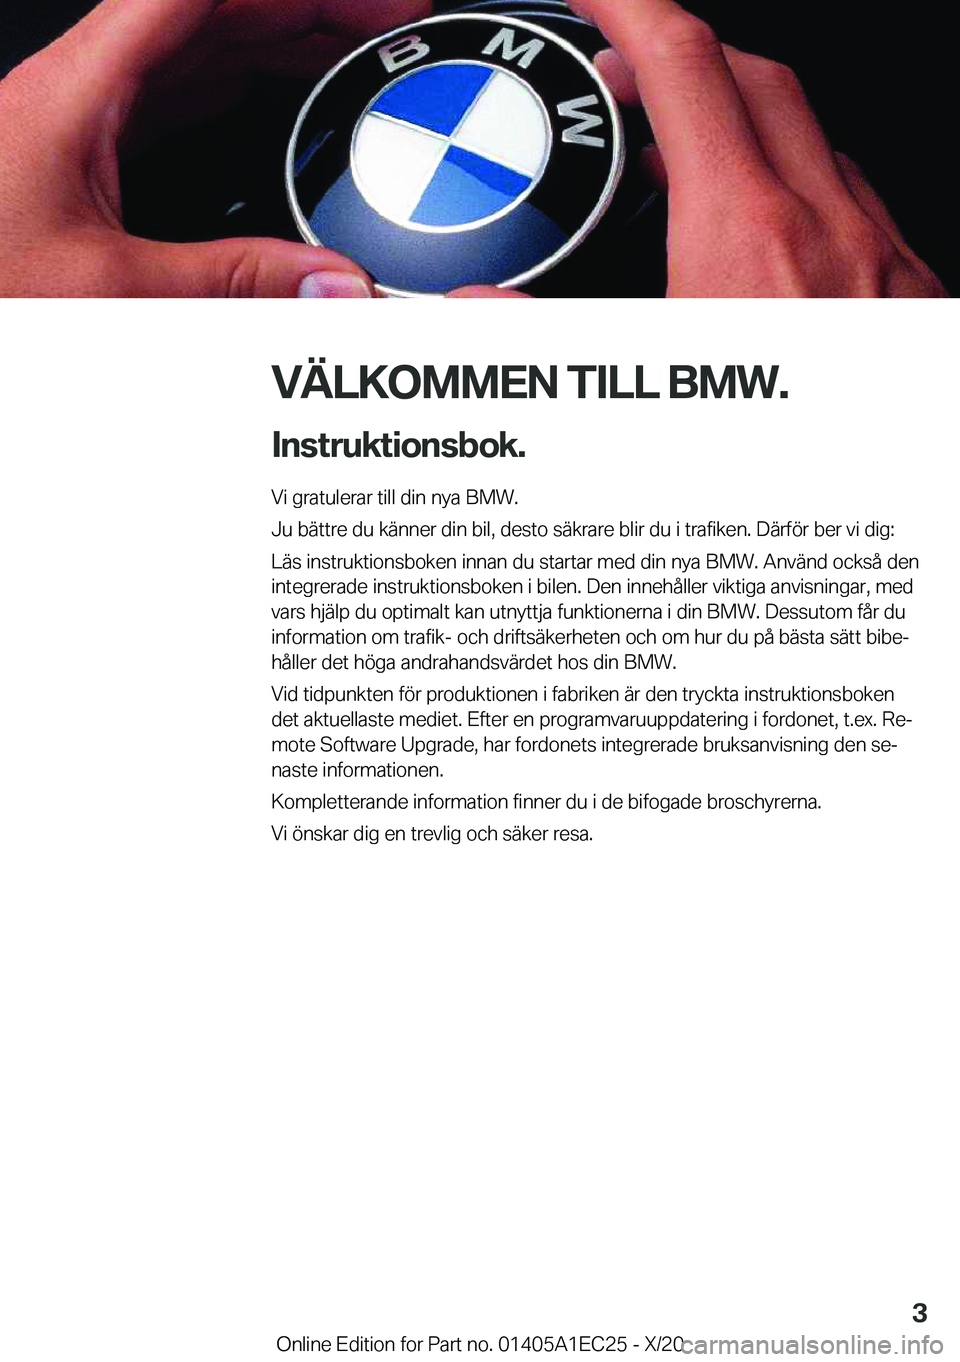 BMW 8 SERIES GRAN COUPE 2021  InstruktionsbÖcker (in Swedish) �V�Ä�L�K�O�M�M�E�N��T�I�L�L��B�M�W�.�I�n�s�t�r�u�k�t�i�o�n�s�b�o�k�.
�V�i��g�r�a�t�u�l�e�r�a�r��t�i�l�l��d�i�n��n�y�a��B�M�W�.
�J�u��b�ä�t�t�r�e��d�u��k�ä�n�n�e�r��d�i�n��b�i�l�,��d�e�